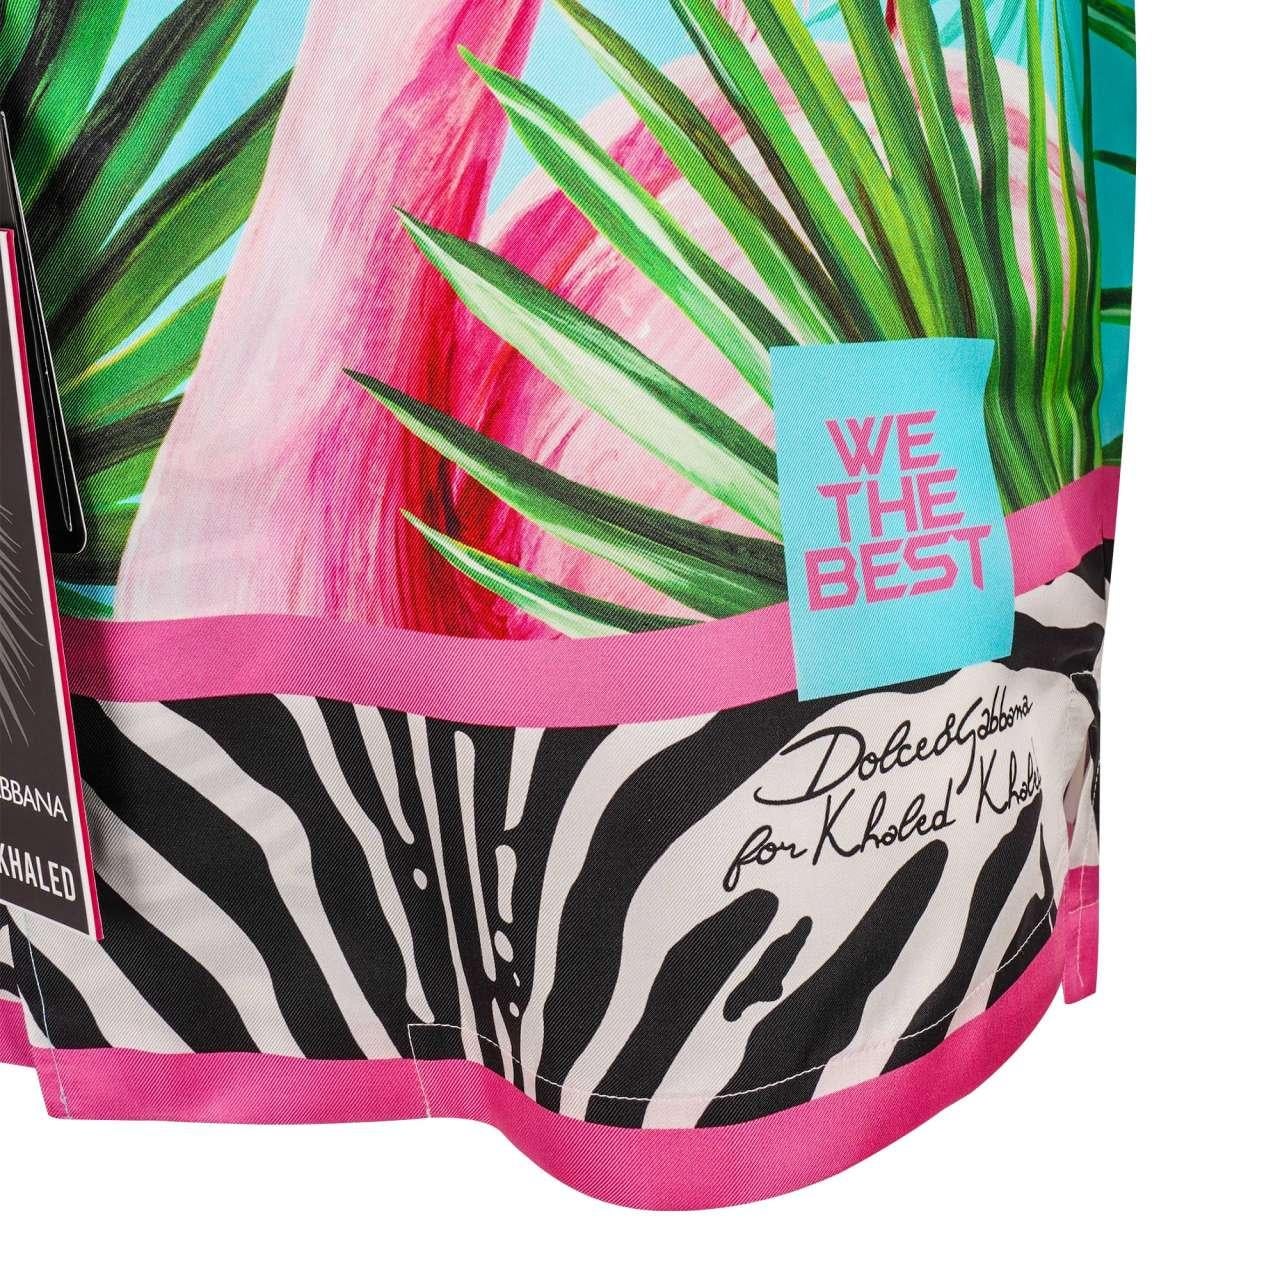 Men's Dolce & Gabbana - DJ Khaled Silk Flamingo Zebra Shirt with Sunglasses and CD 37 For Sale